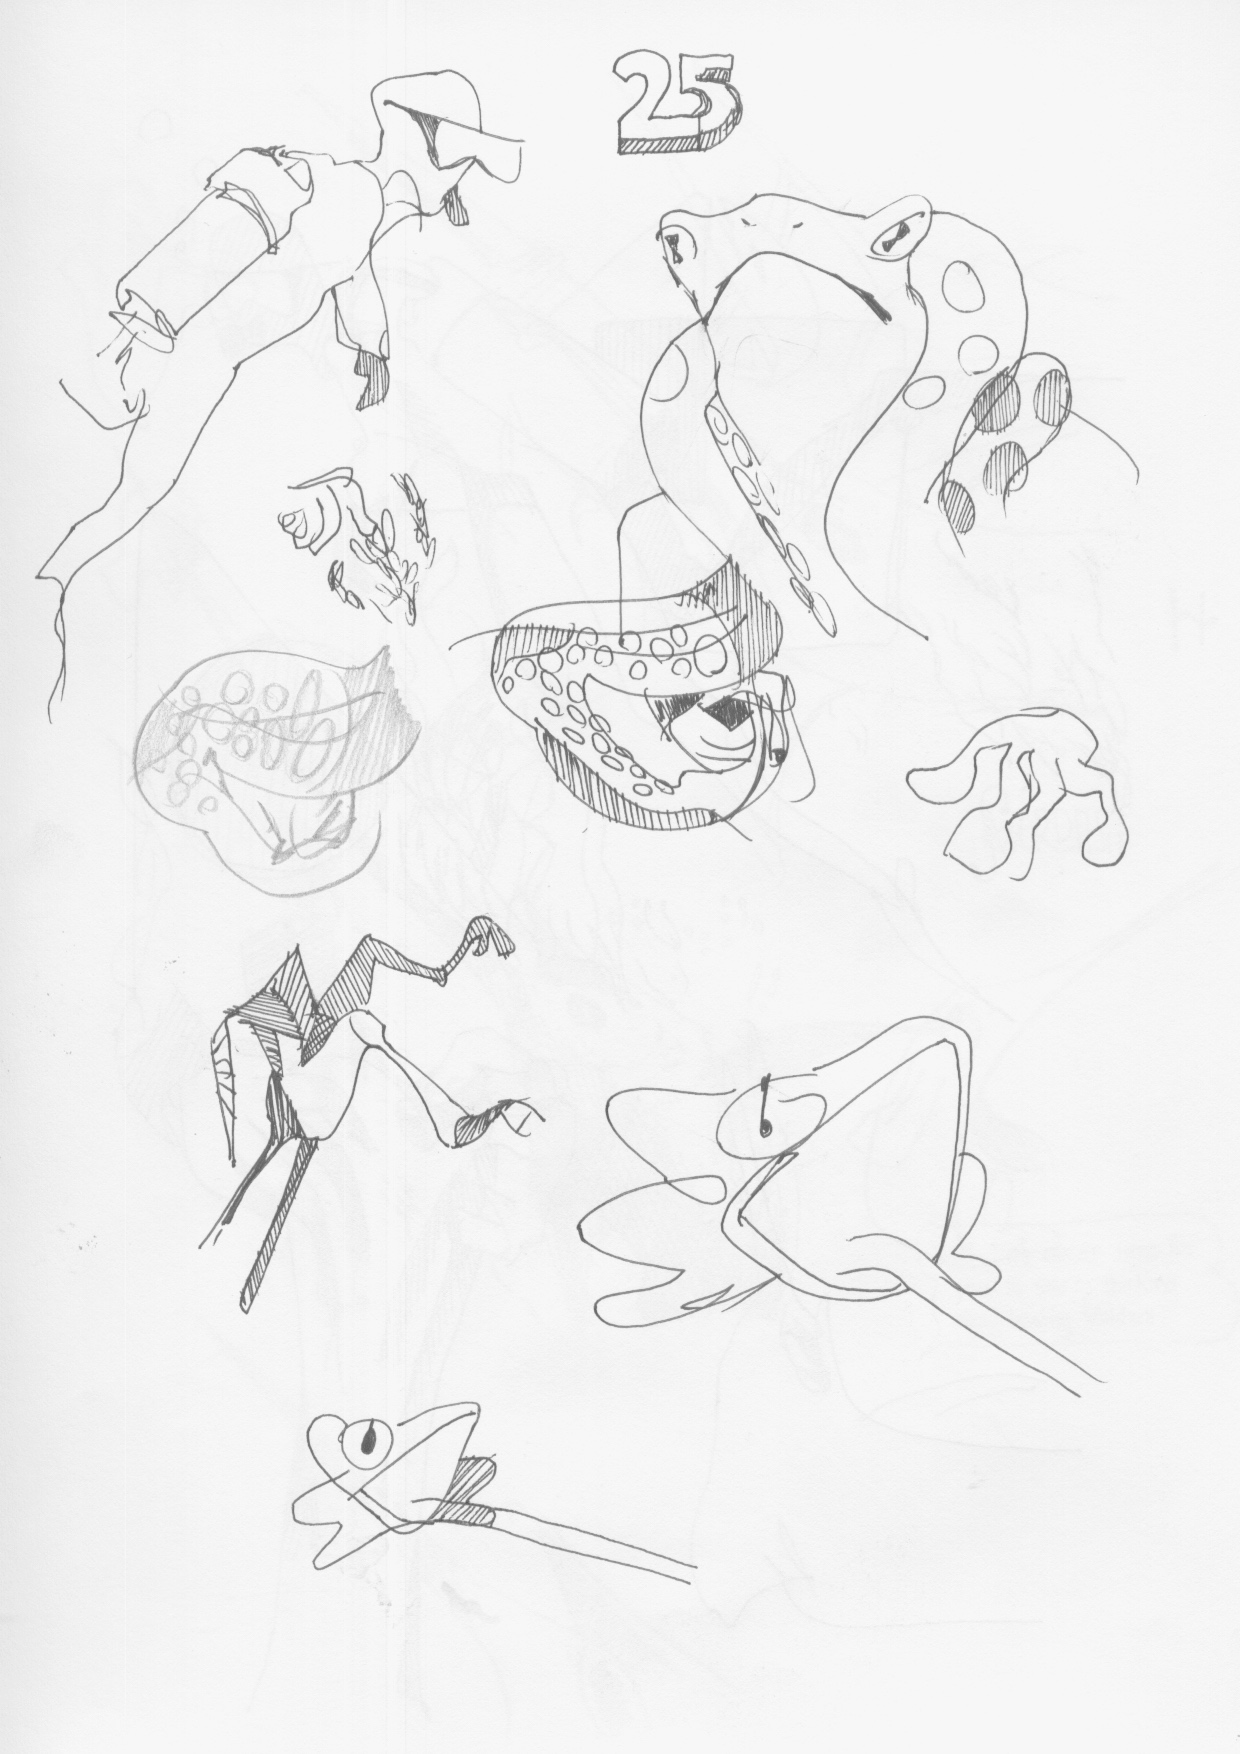 Sketchbook page 43